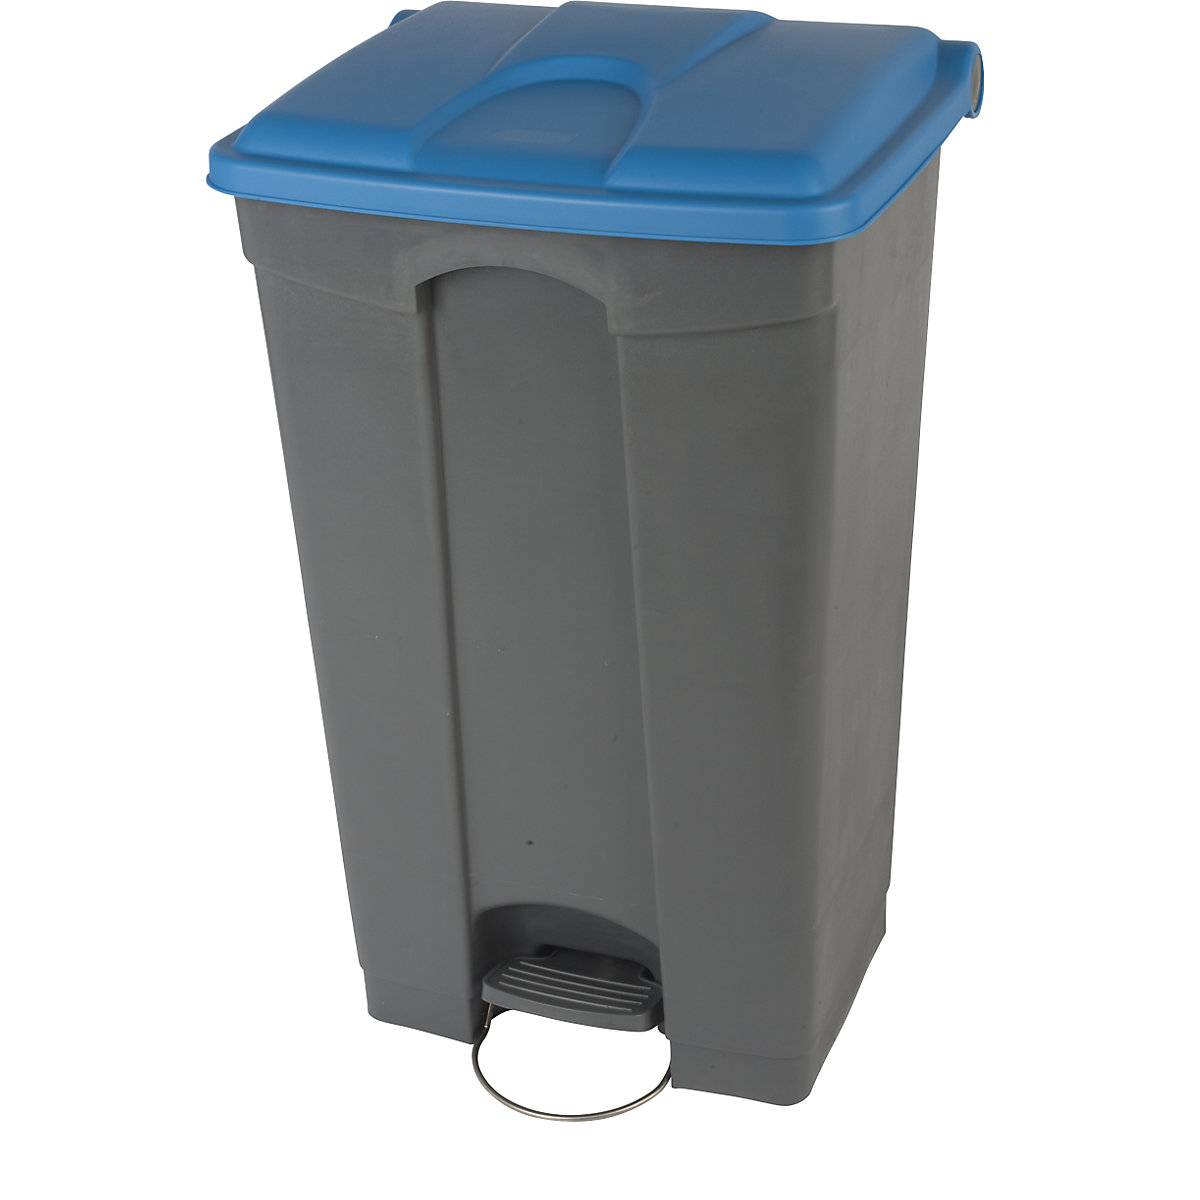 EUROKRAFTbasic – Afvalverzamelaar met pedaal, inhoud 90 l, b x h x d = 505 x 790 x 410 mm, grijs, deksel blauw